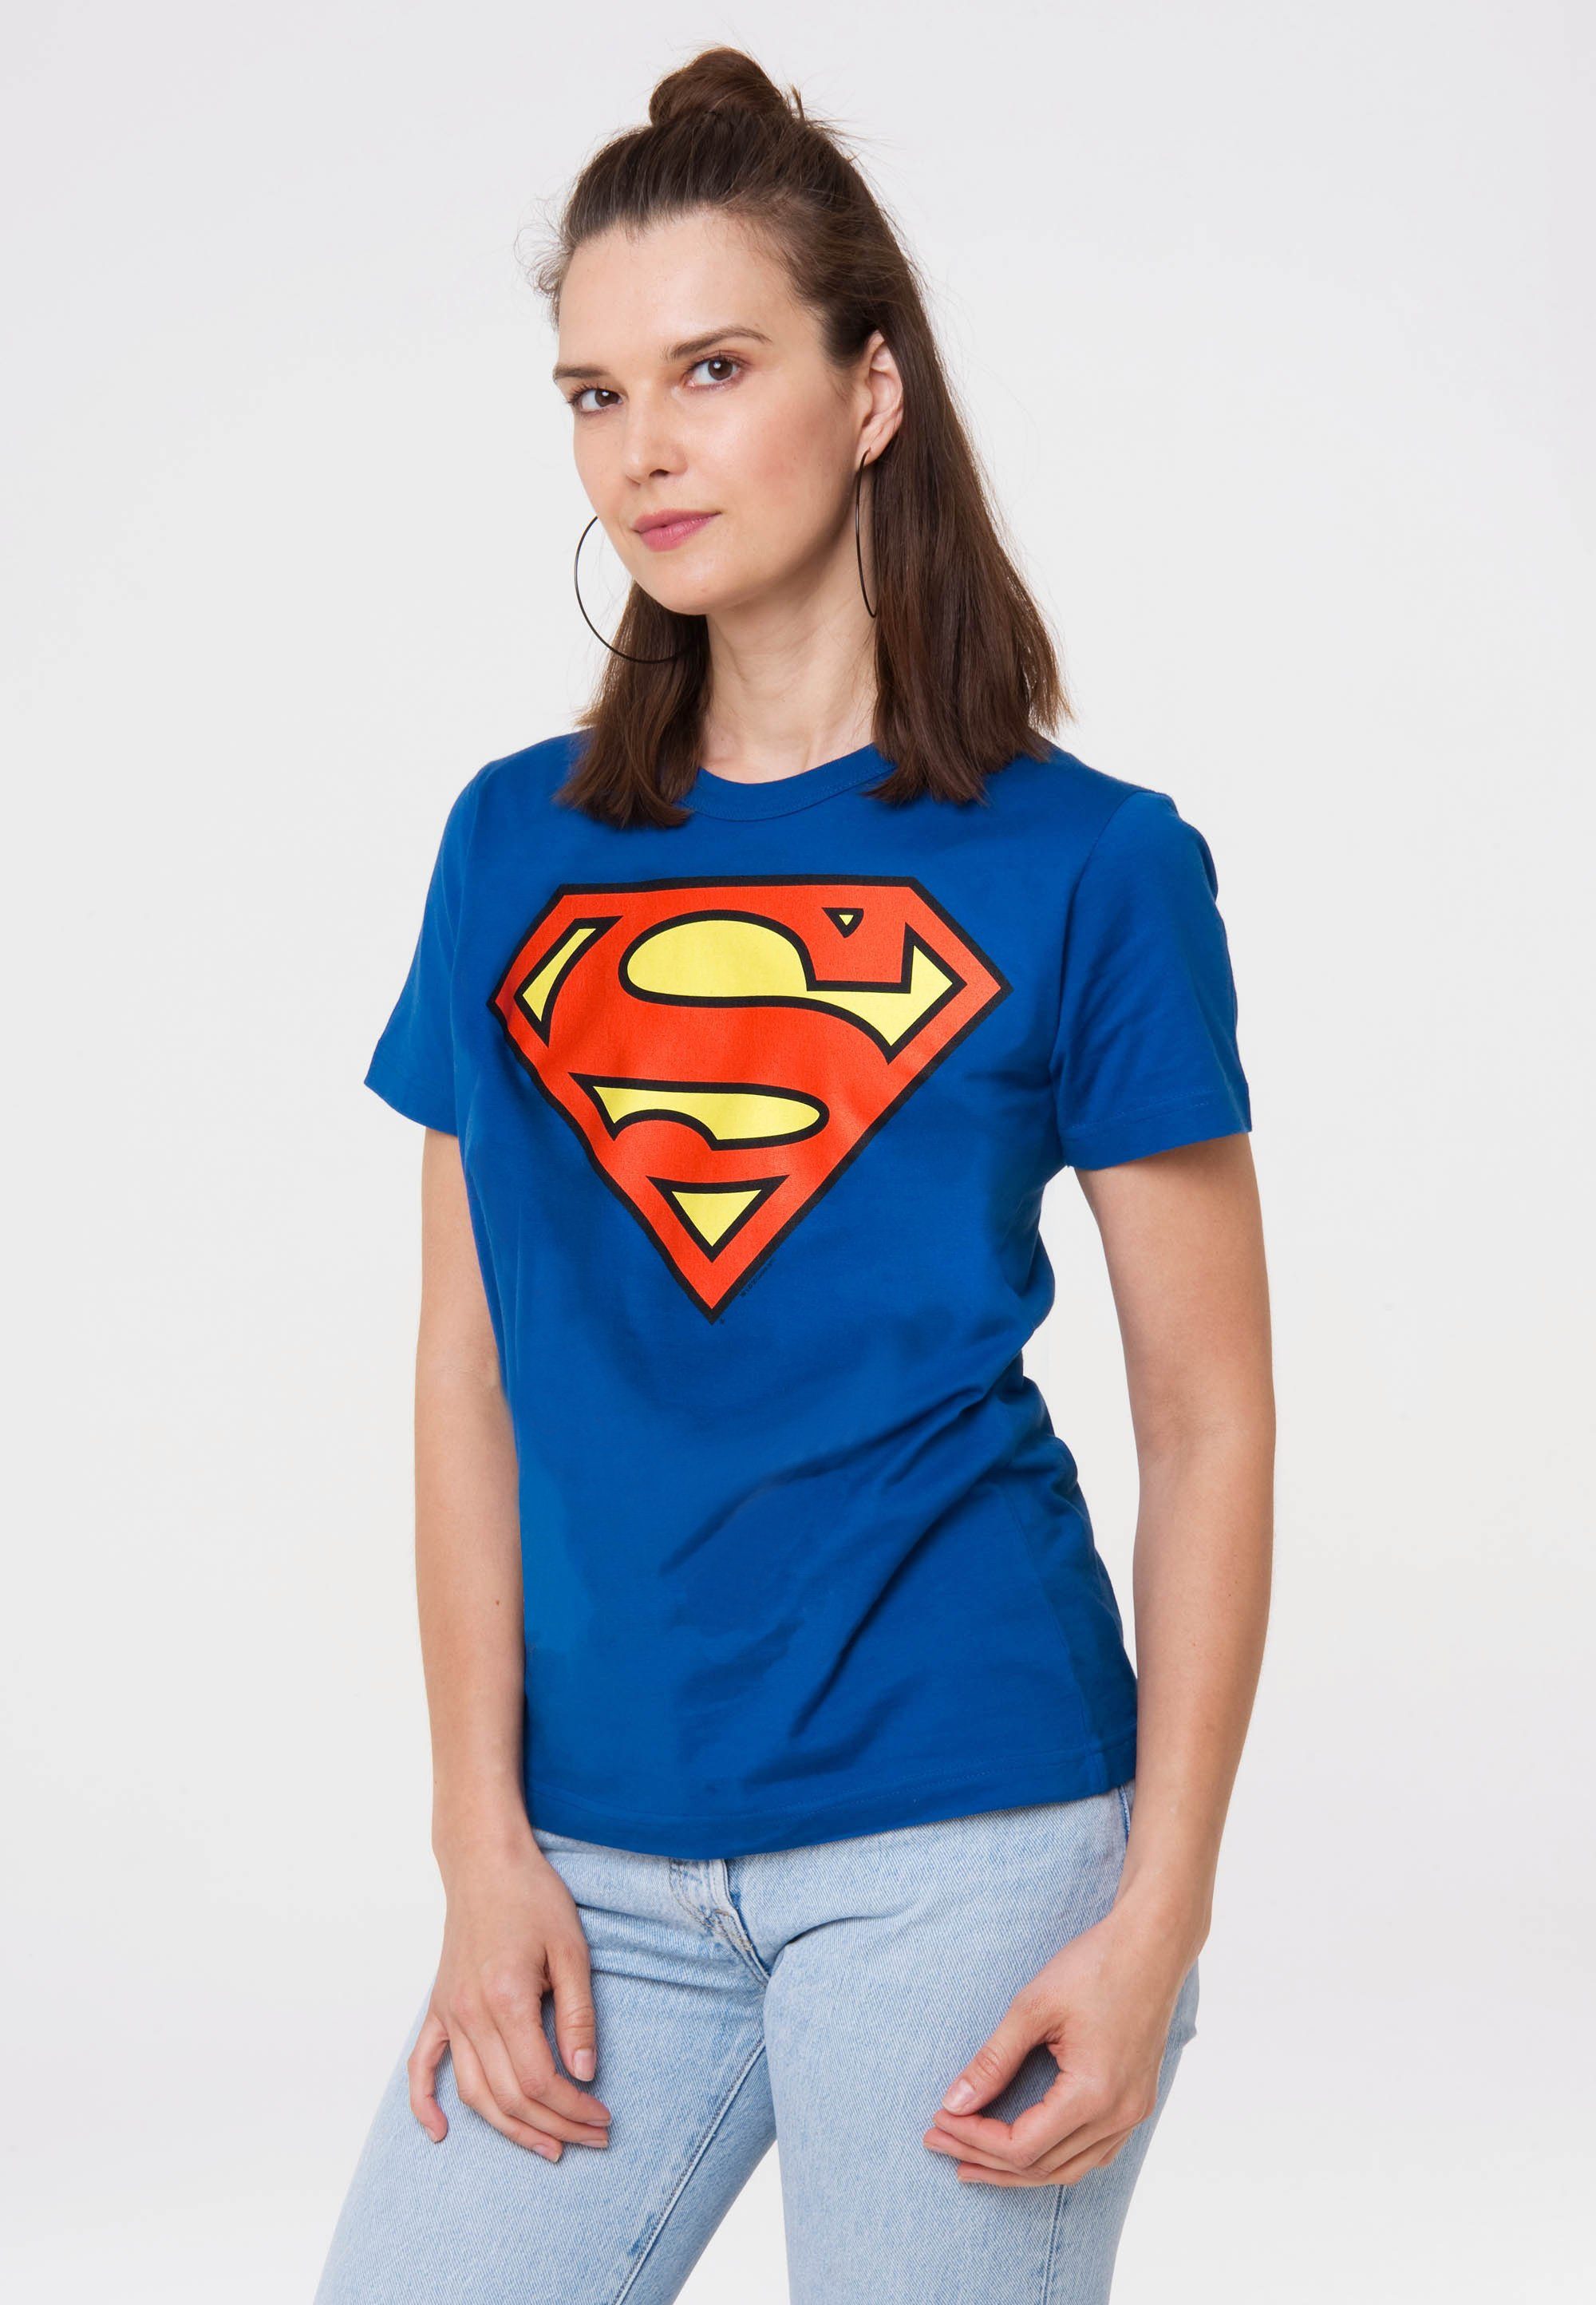 LOGOSHIRT T-Shirt Superman Logo mit trendigem Superhelden-Print,  Aufwendiger Siebdruck mit Superman-Logo als Highlight | T-Shirts